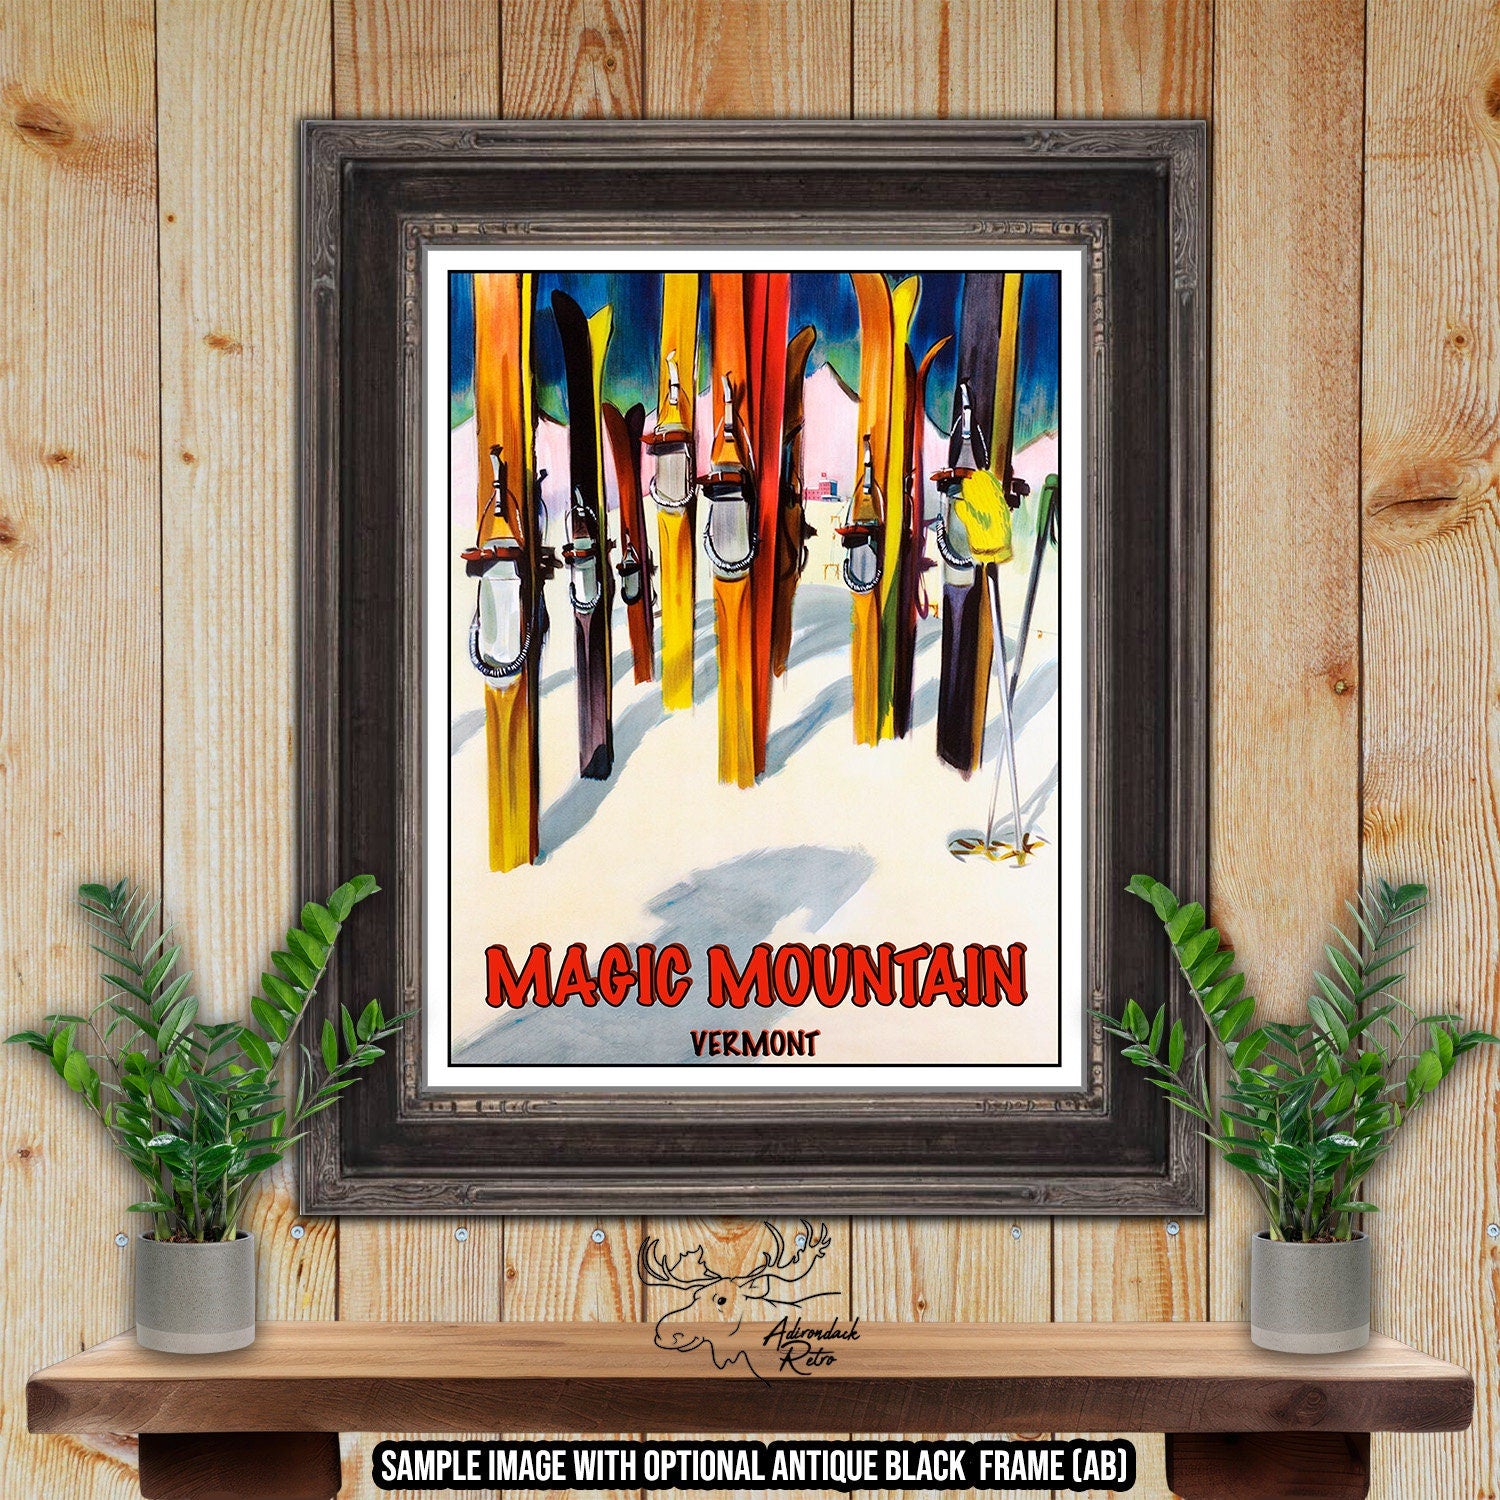 Magic Mountain Vermont Retro Ski Resort Poster at Adirondack Retro